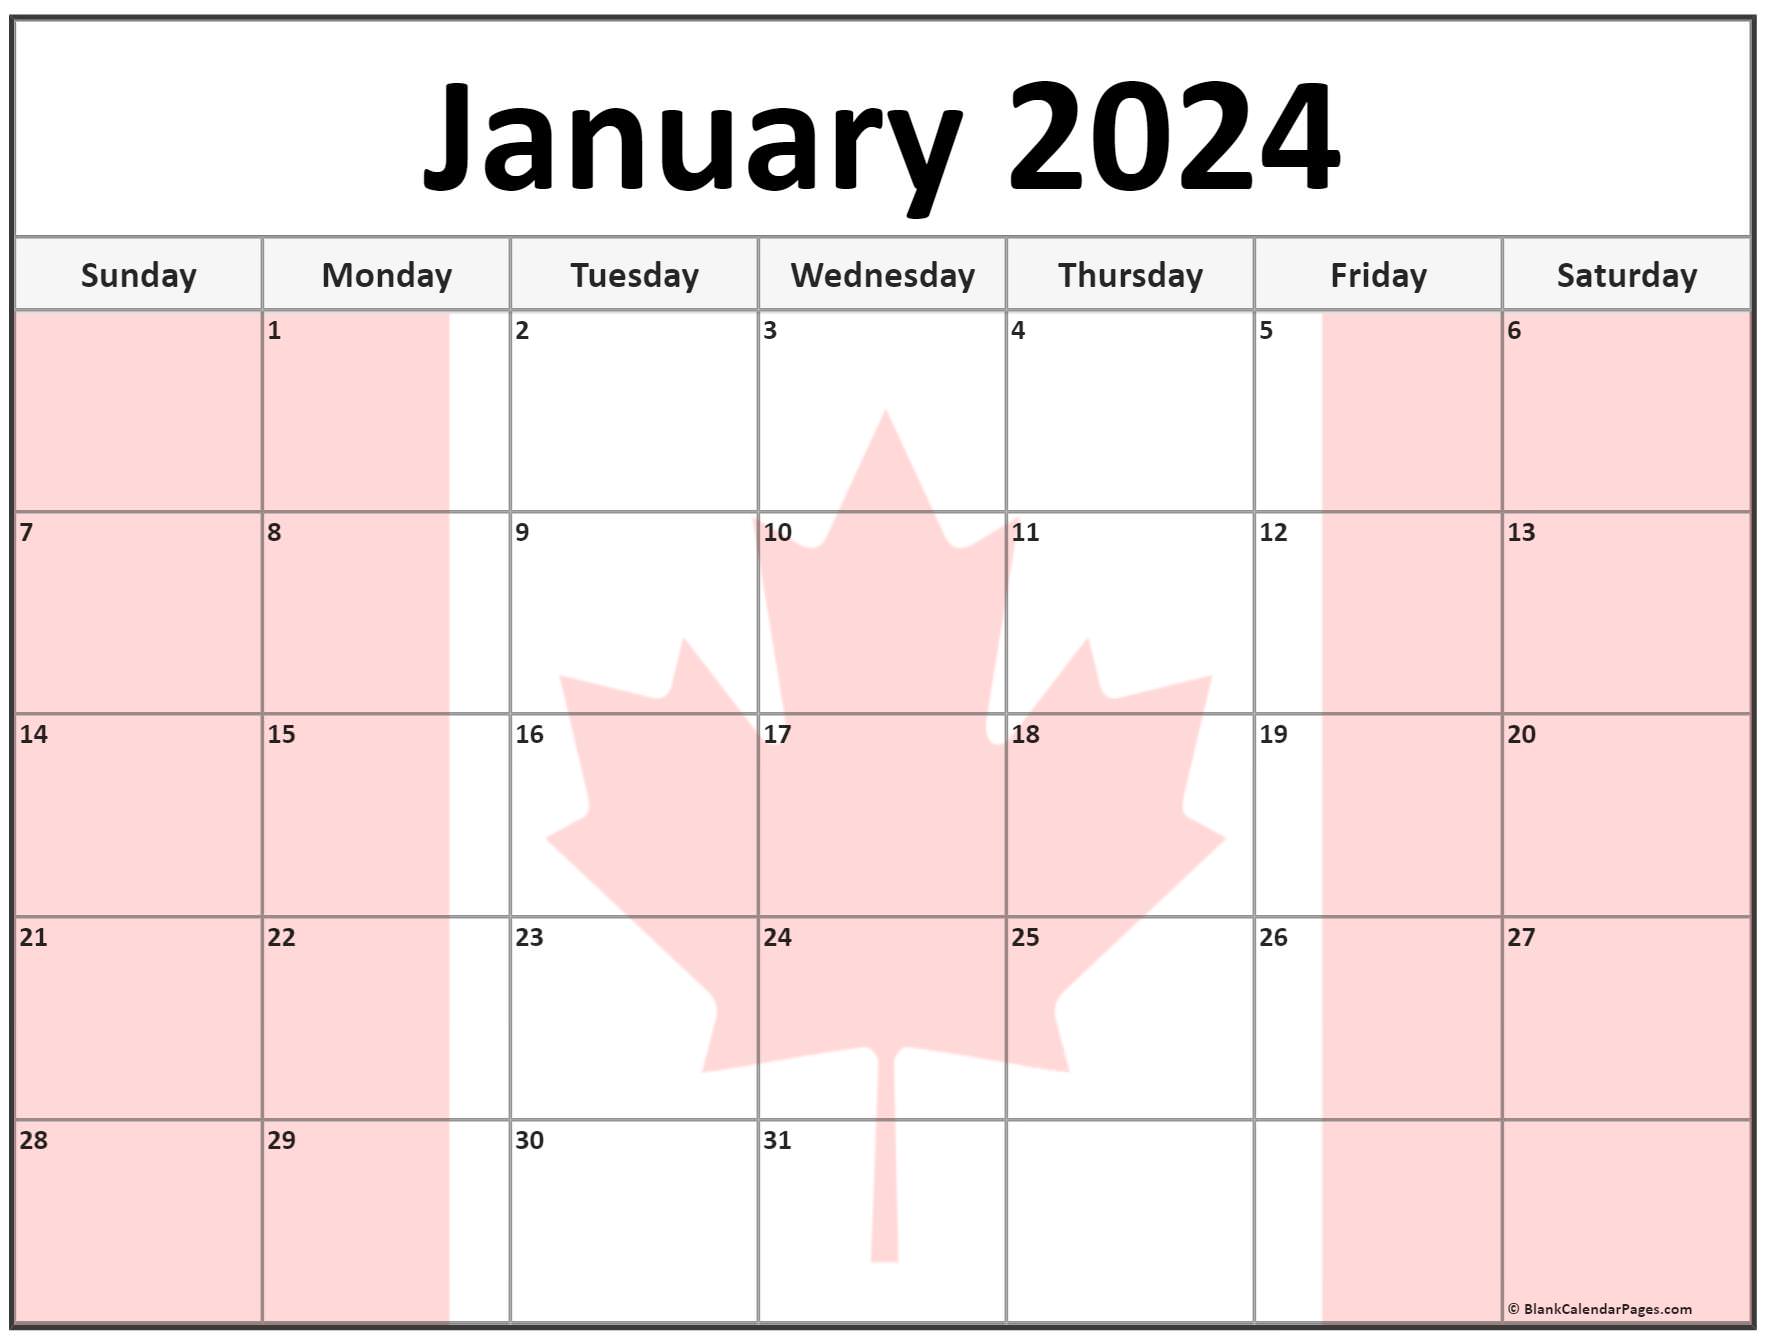 Personalized Calendar 2024 Canada Printable Calendar Suzie Etheline